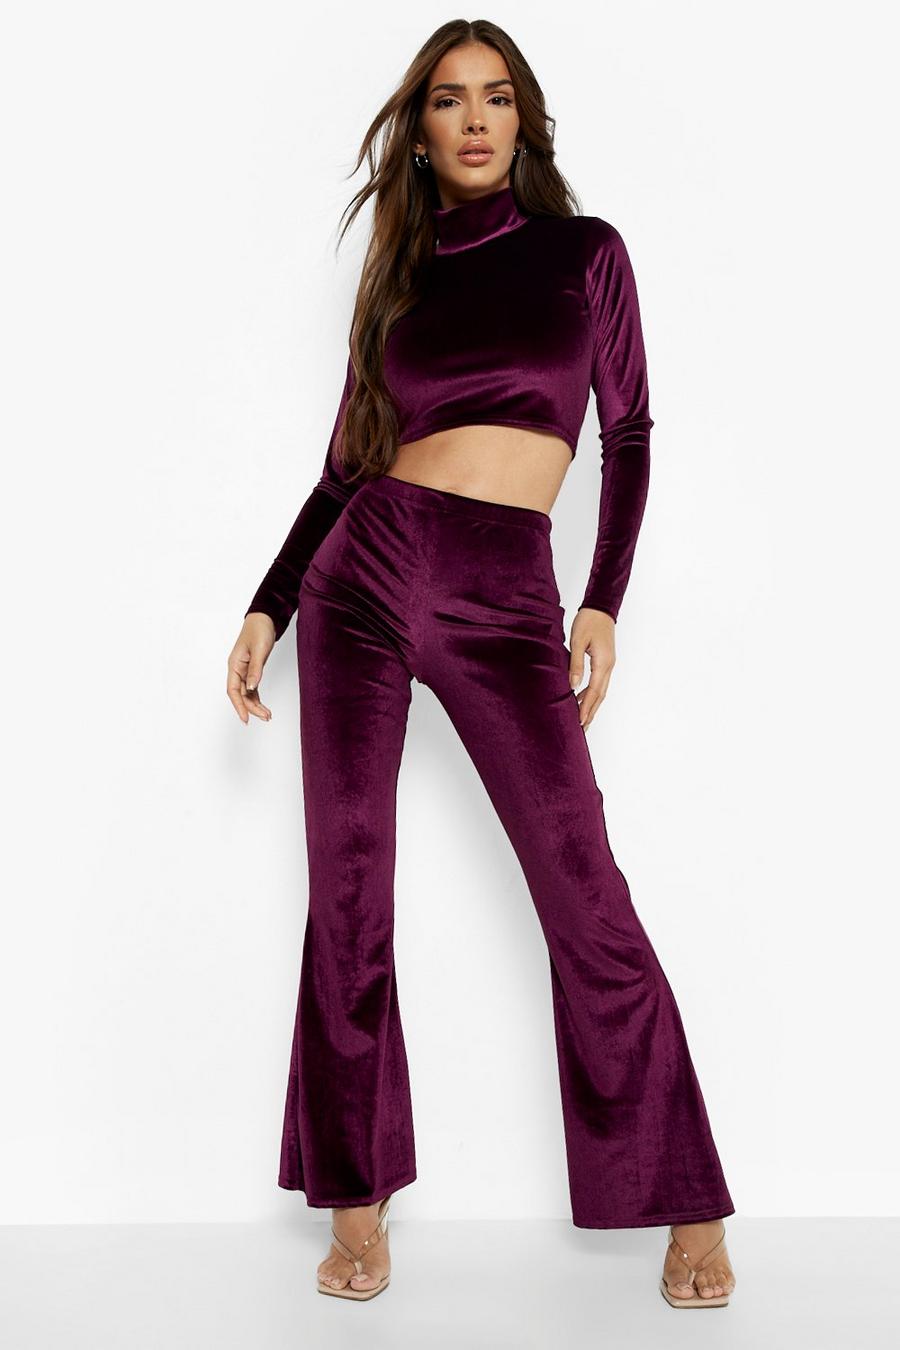 Jewel purple Velvet High Neck Top & Flared Pants image number 1